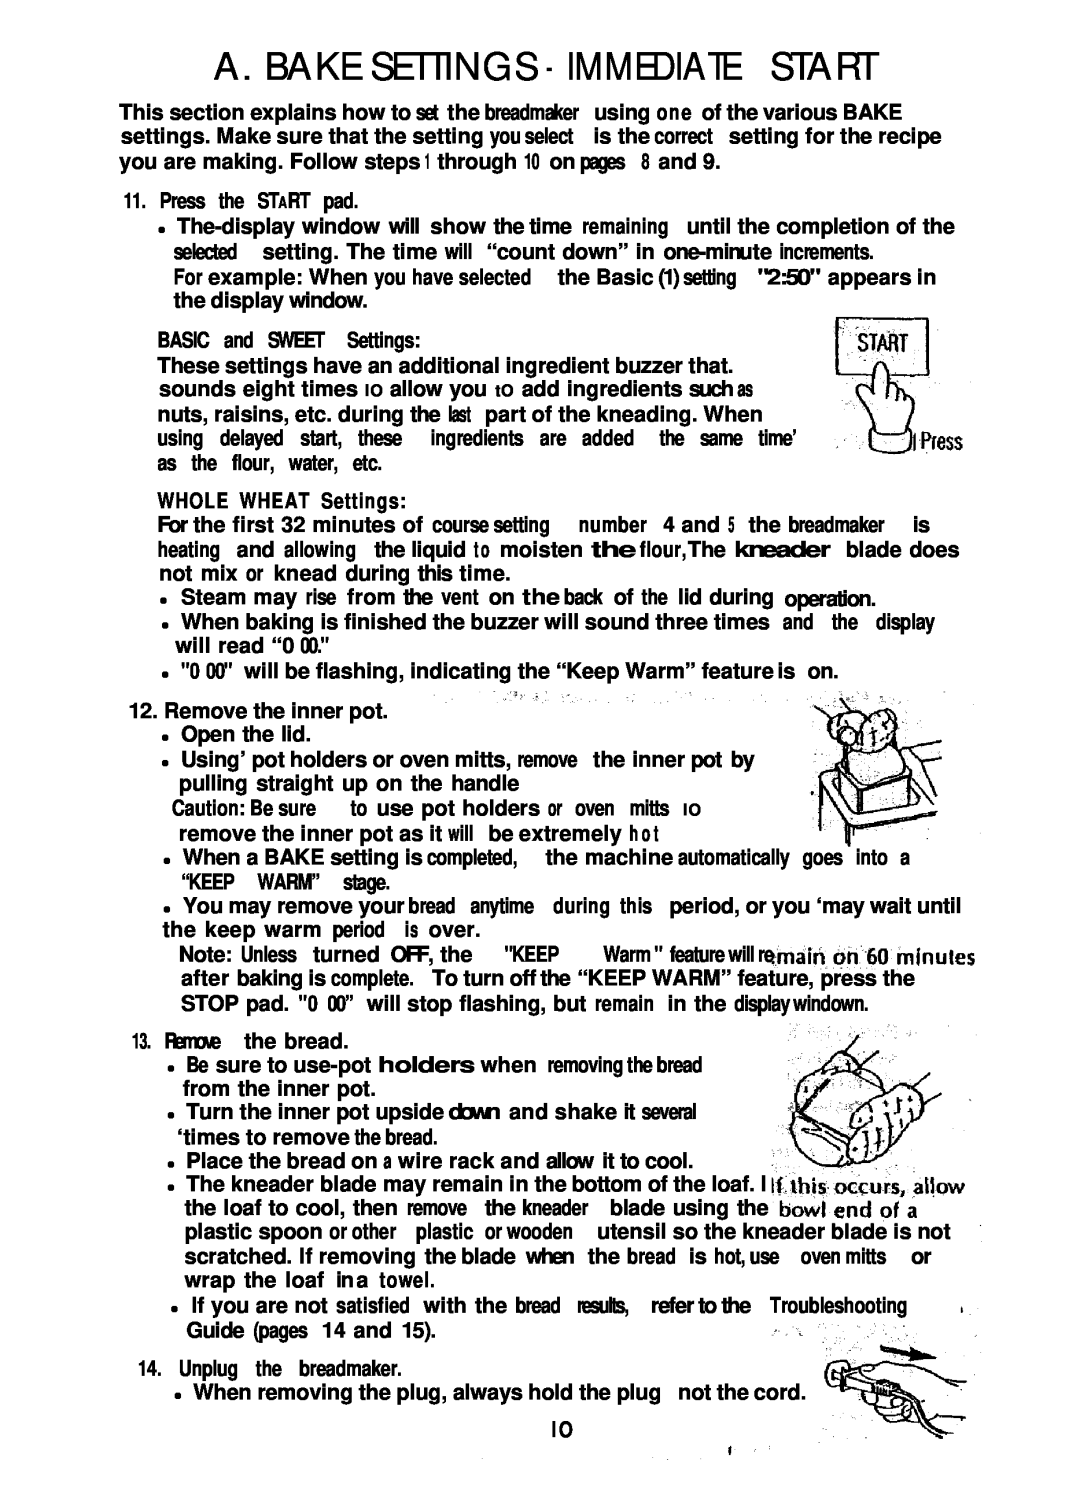 Mr. Coffee BMR 200 instruction manual A. Bake Settings - Immediate Start 